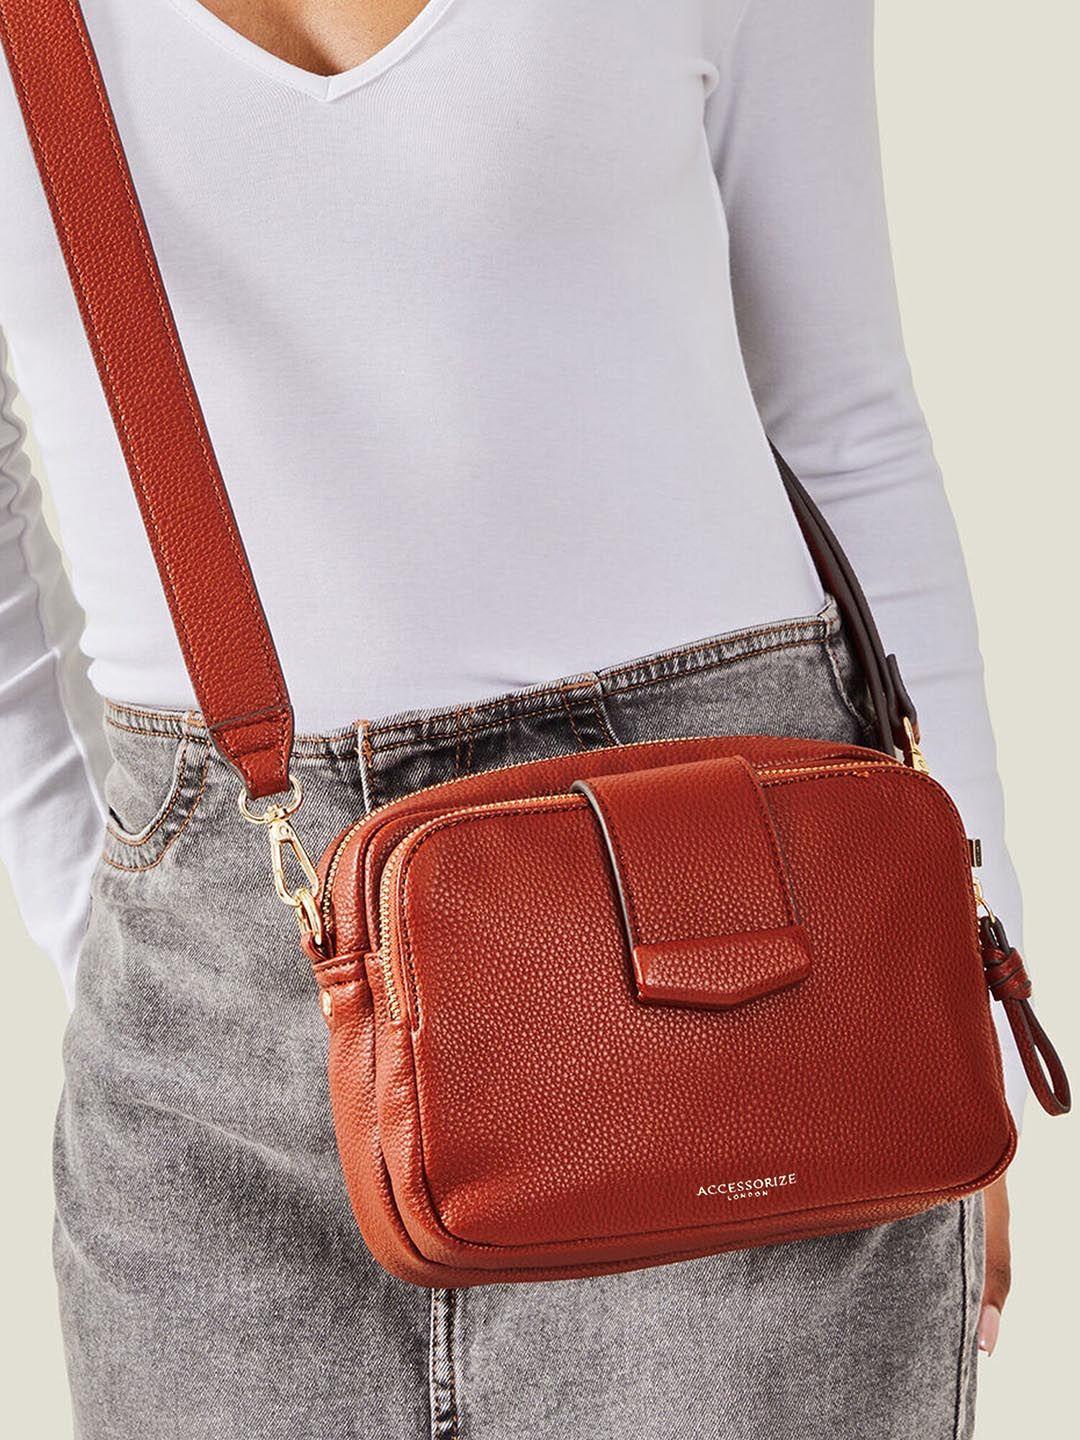 accessorize-rust-sling-bag